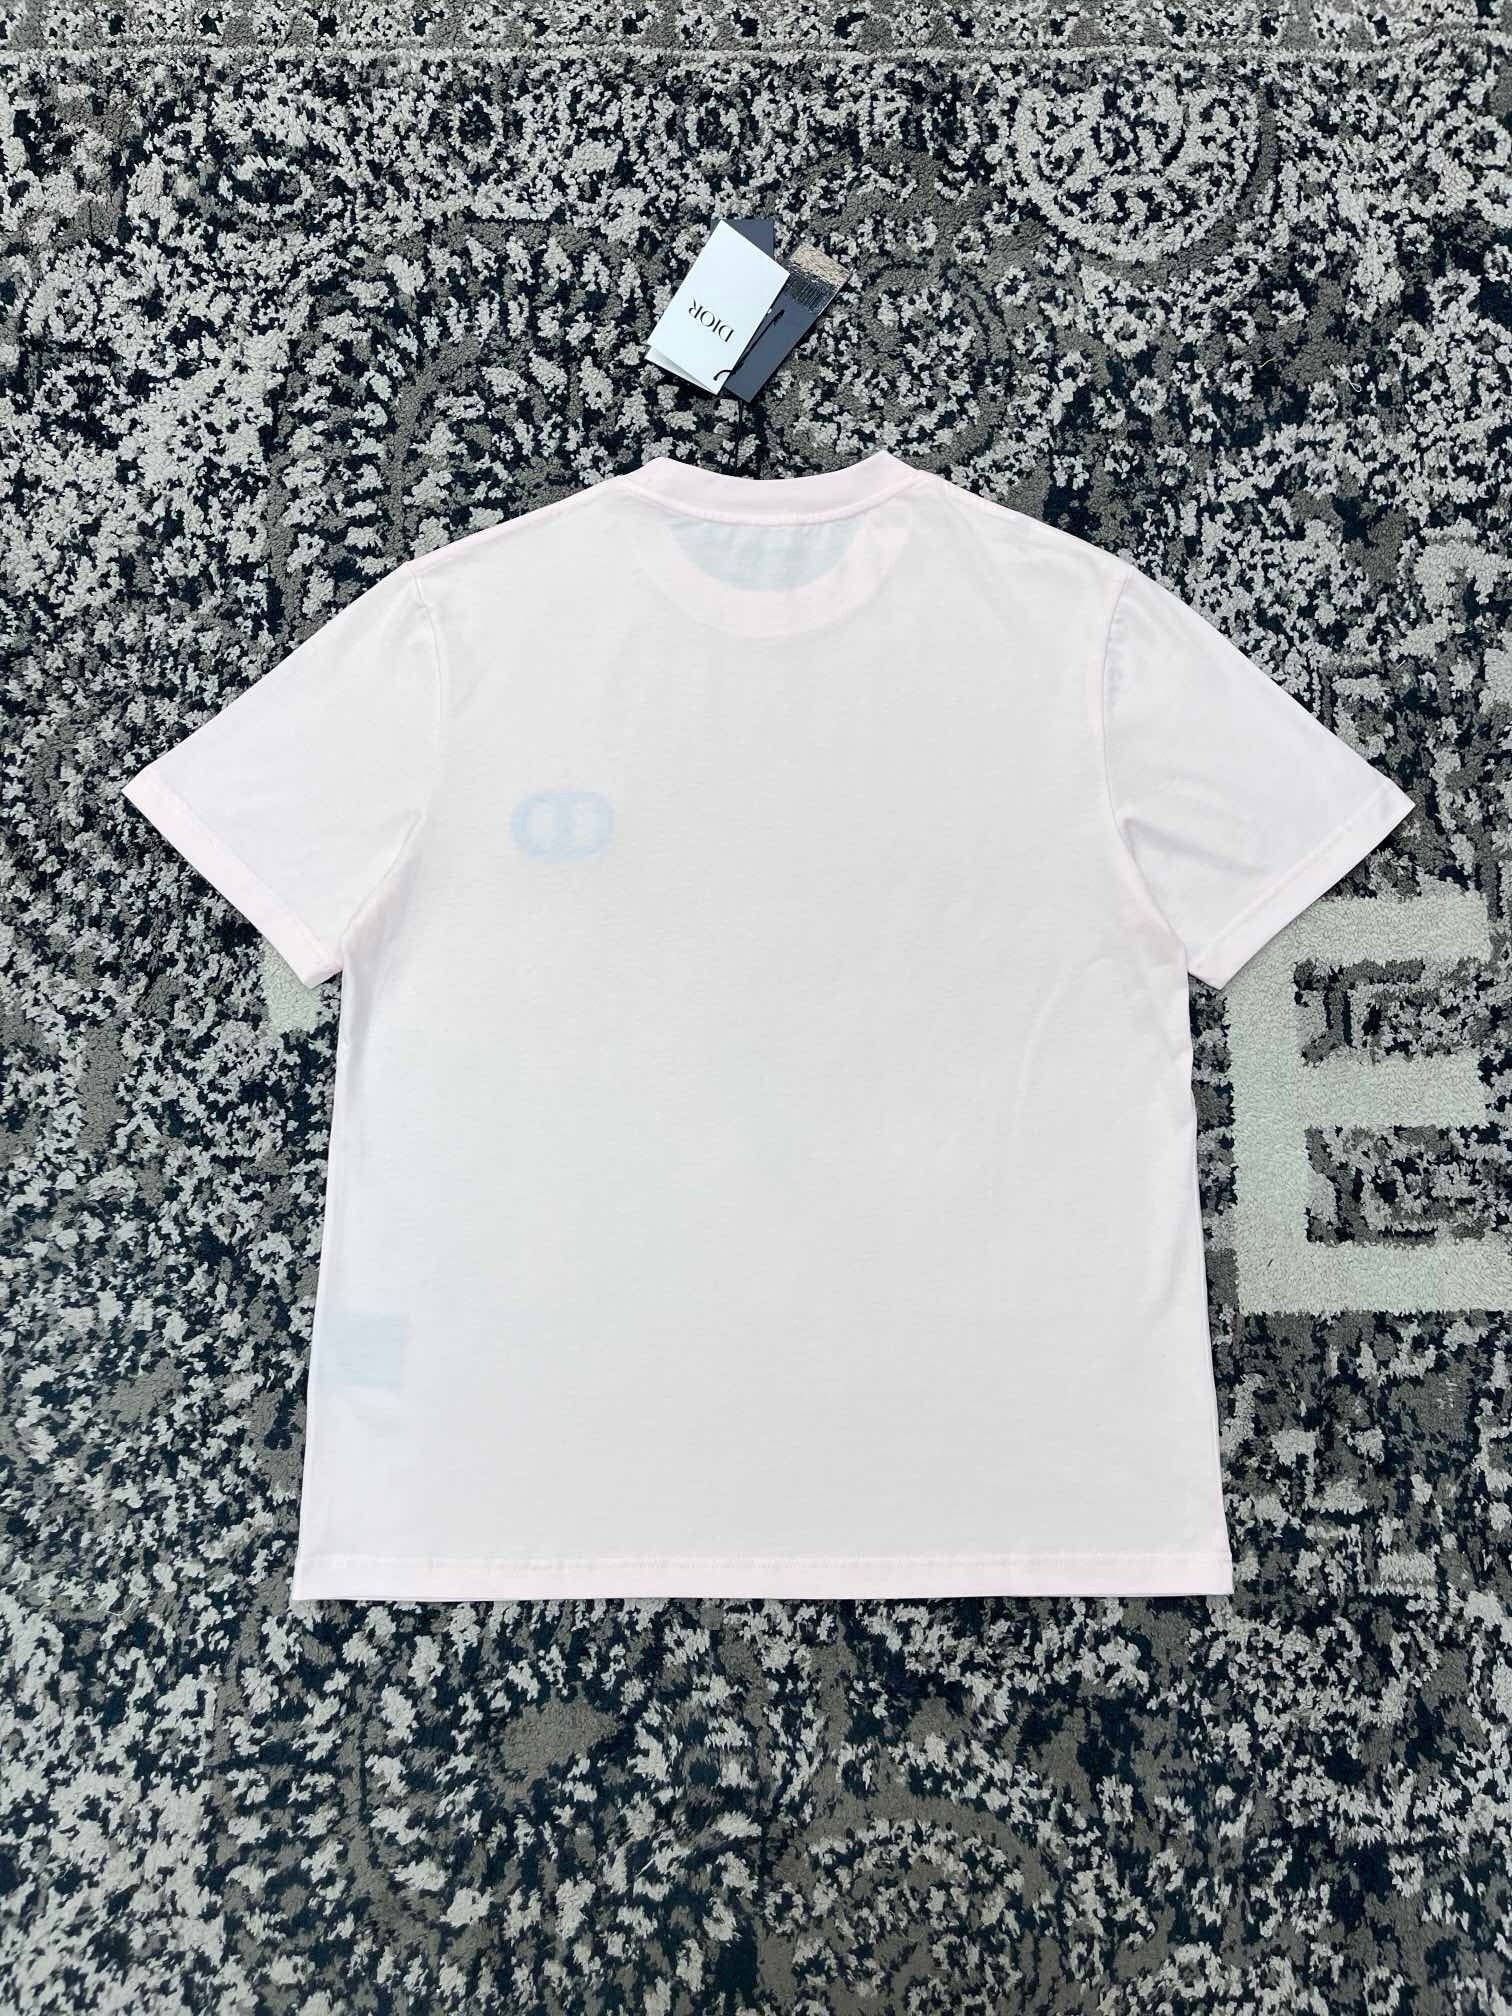 White T-Shirt - Size L